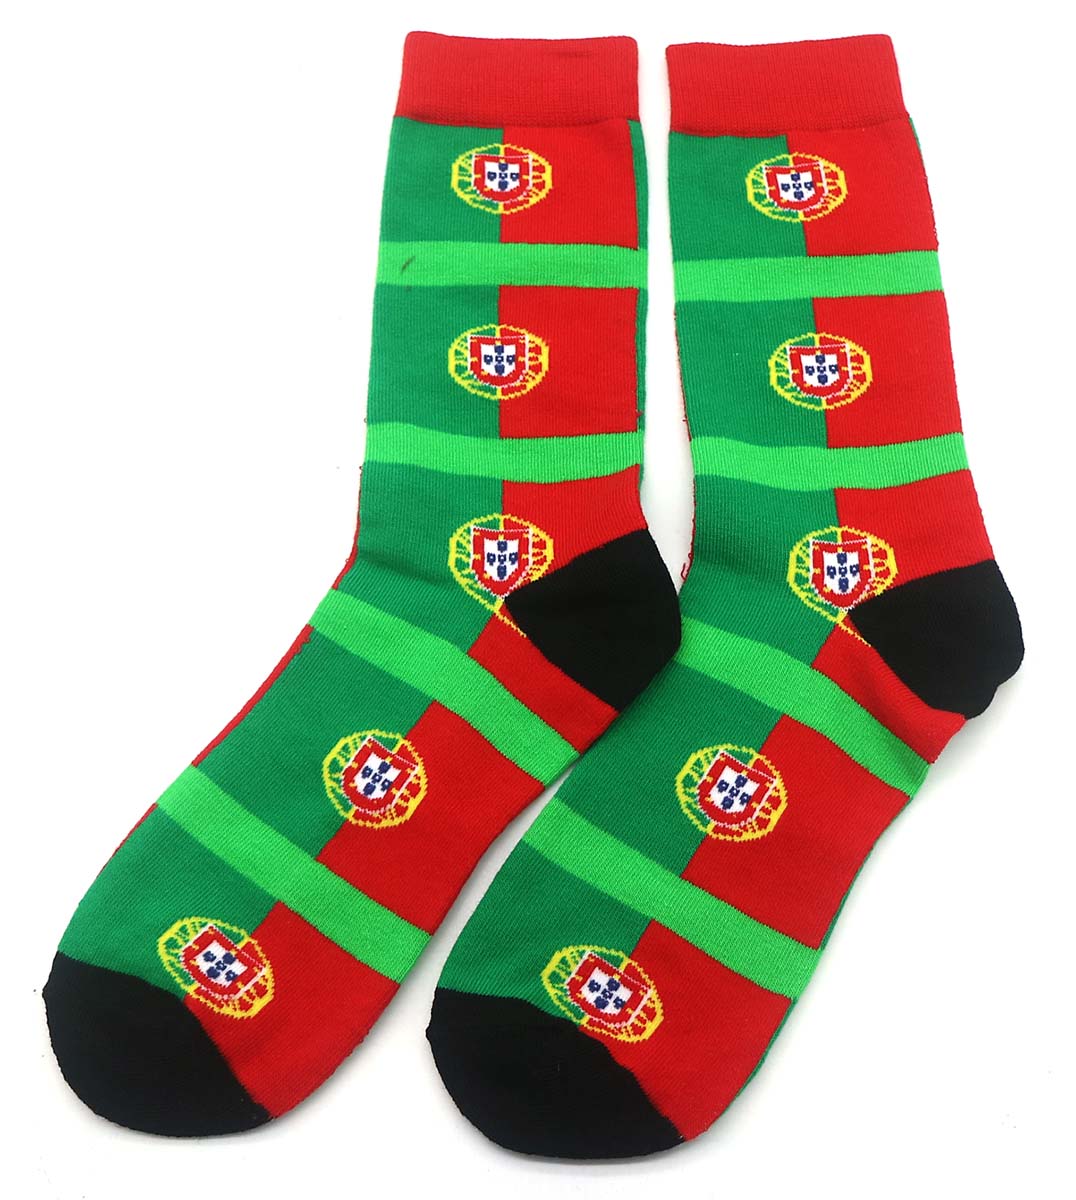 S-G4.2 SOCK2382-009-PORTUGAL Pair of Socks Size 38-45 Portugal